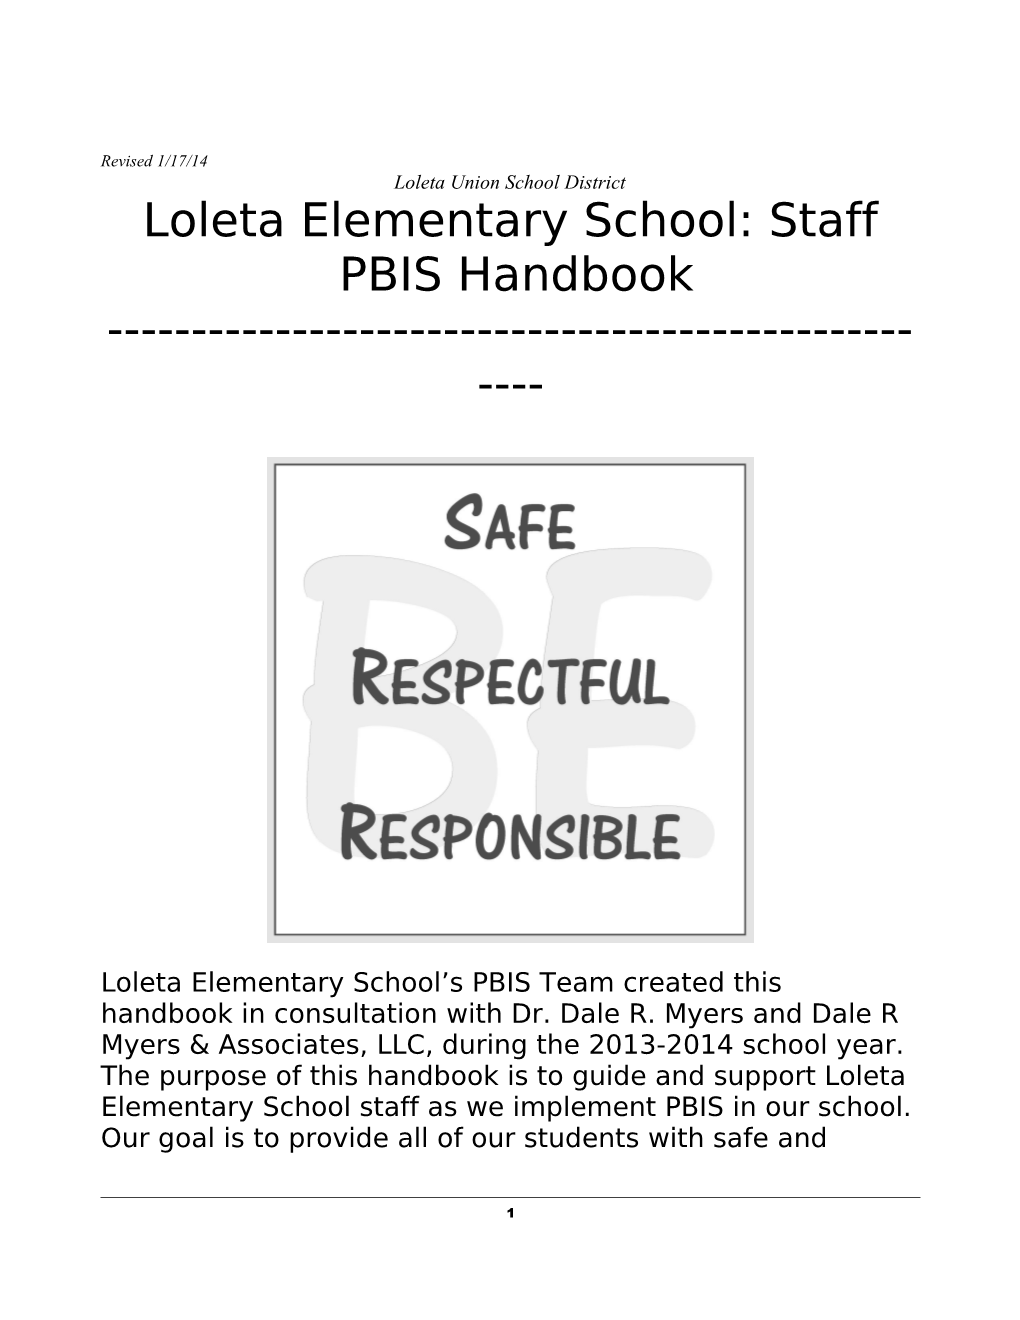 Loleta Union School District